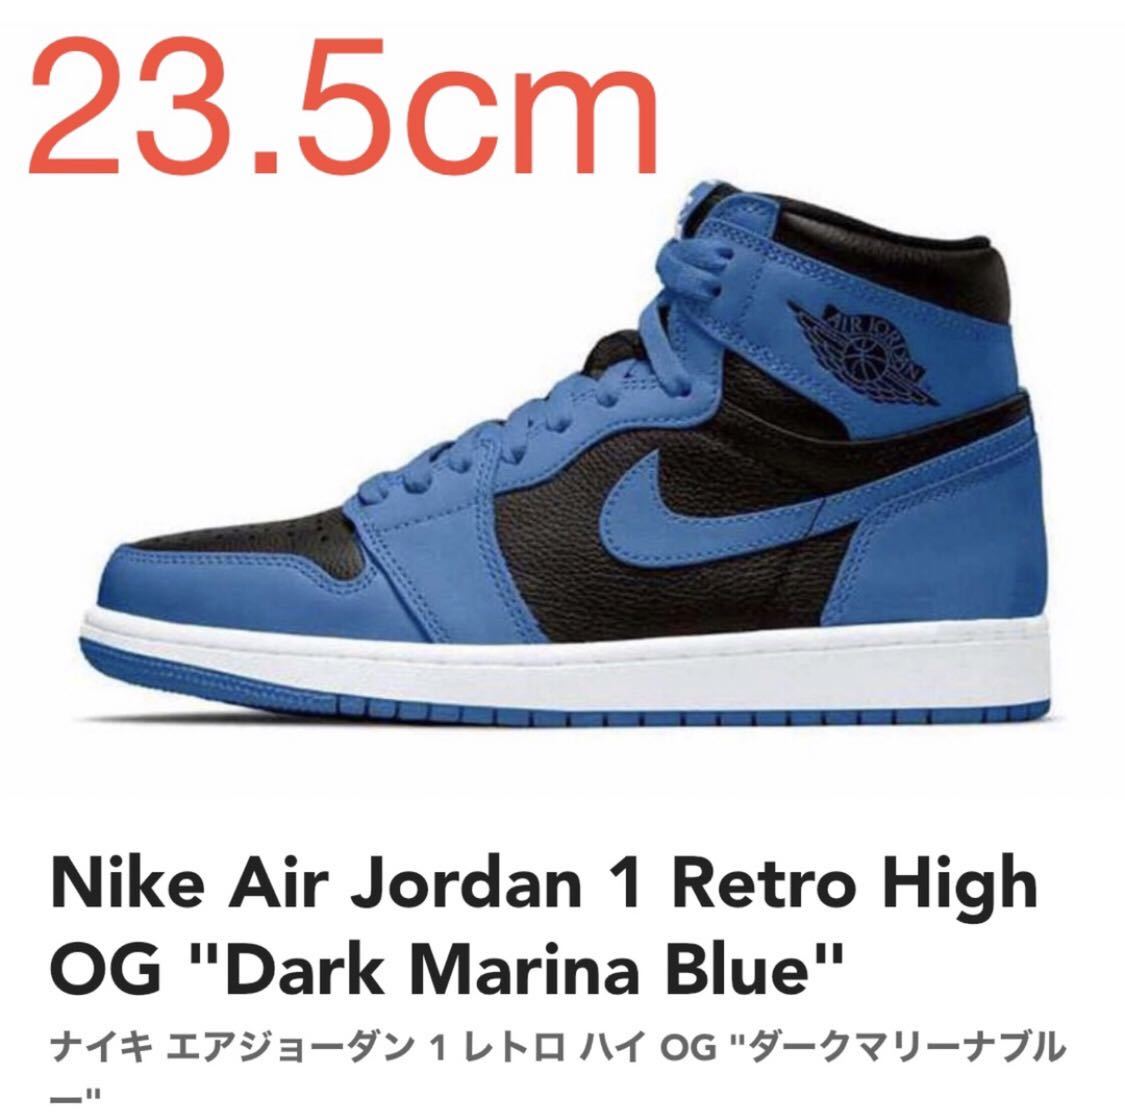 Nike AJ1 High OG Dark Marina Blue ナイキ エアジョーダン 1 レトロ ハイ OG ダークマリーナブルー 555088-404 23.5cm US5 新品